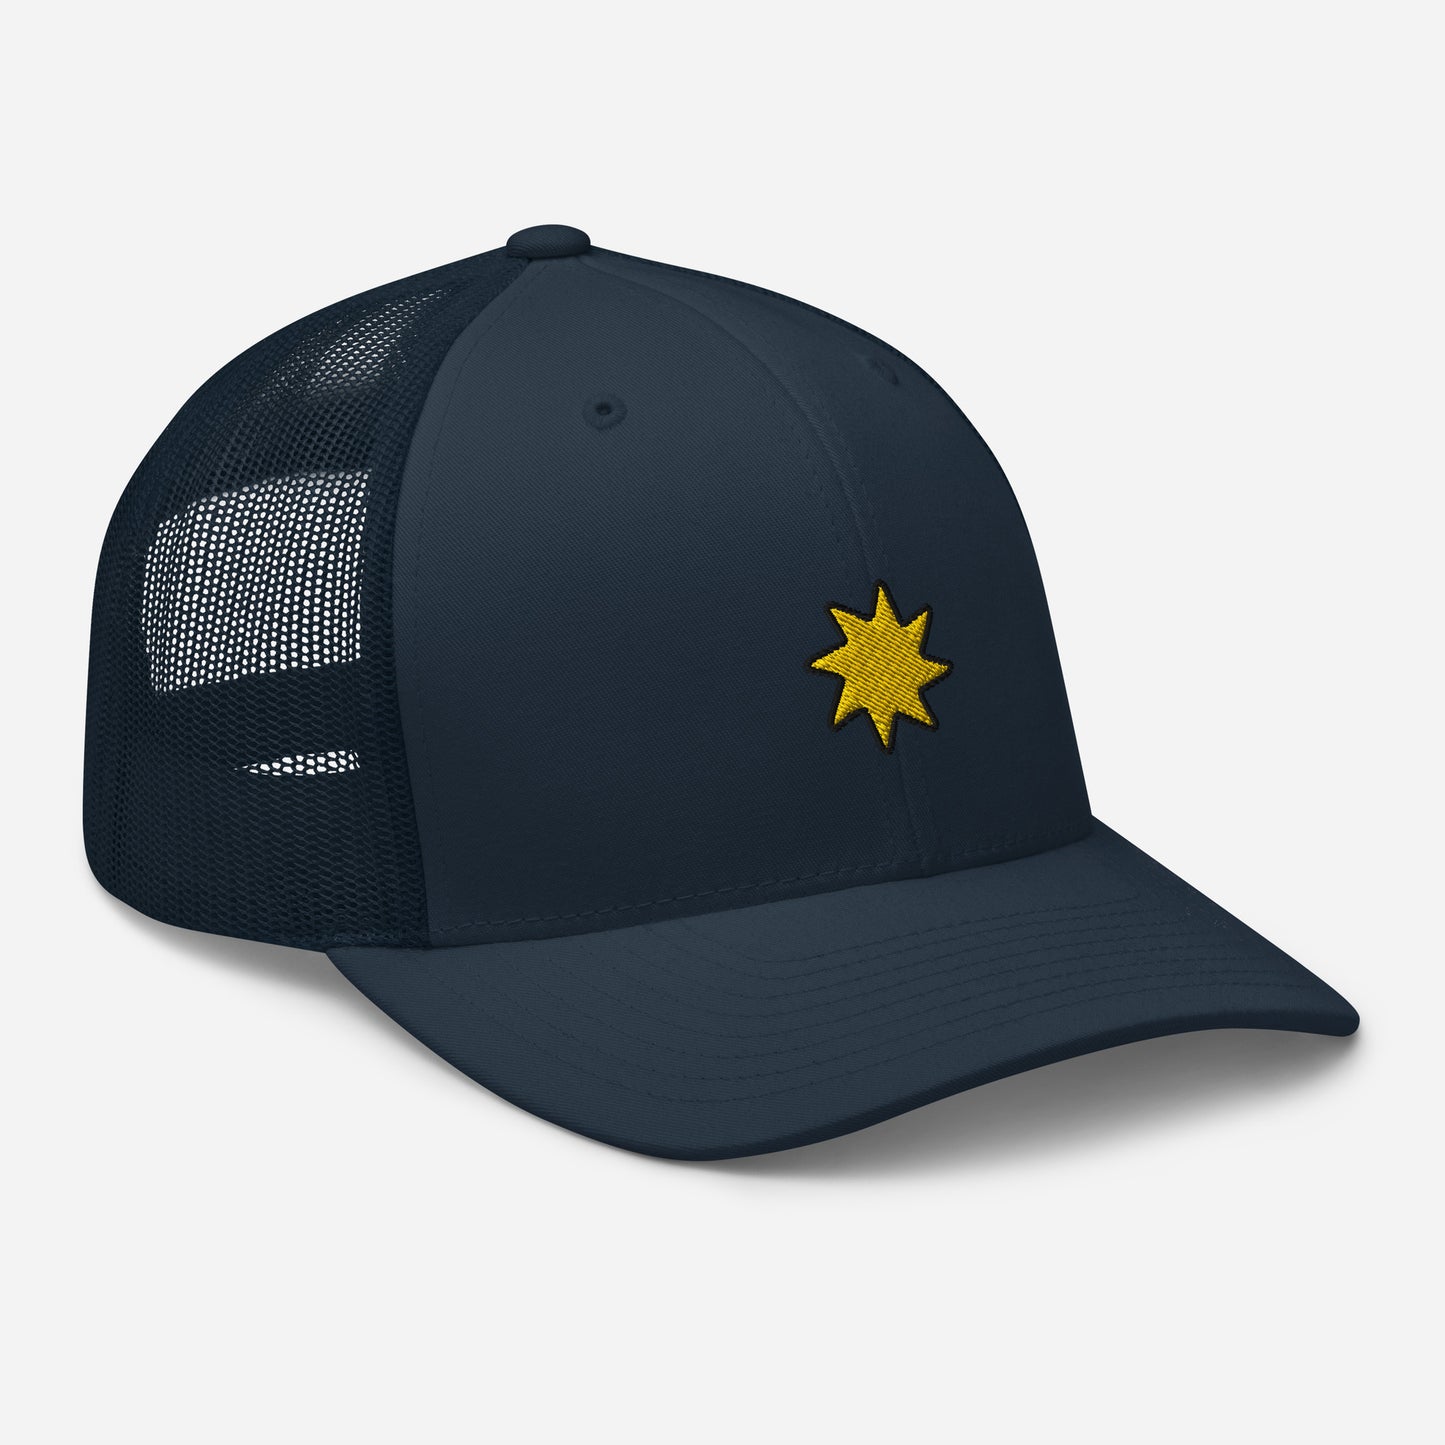 Mesh Cap with Sun Wheel Symbol